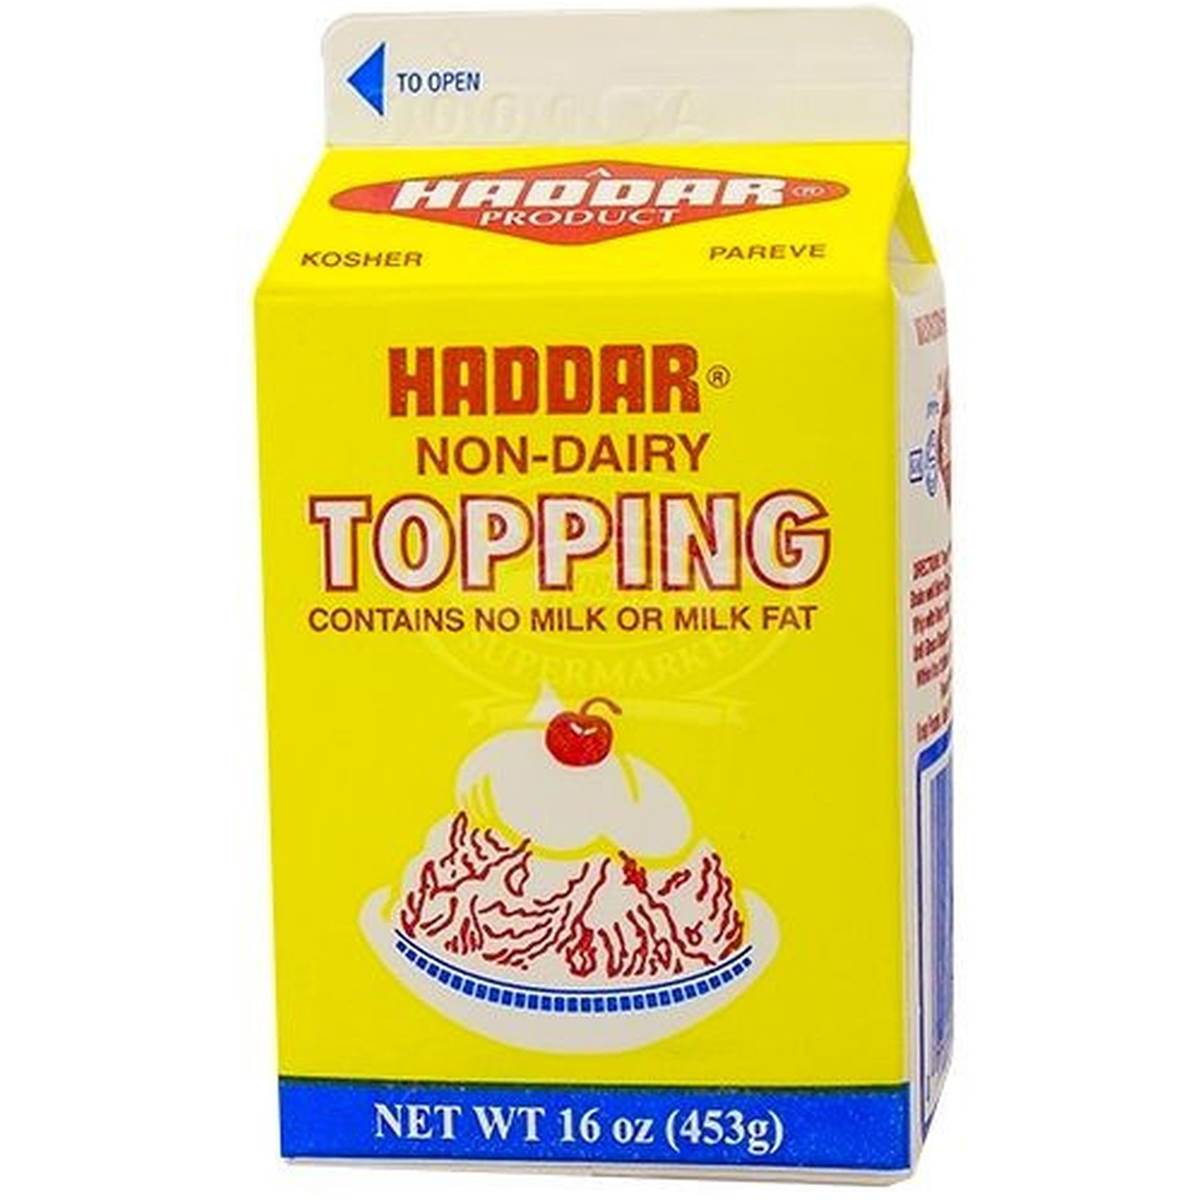 Haddar TOPPING 16 oz